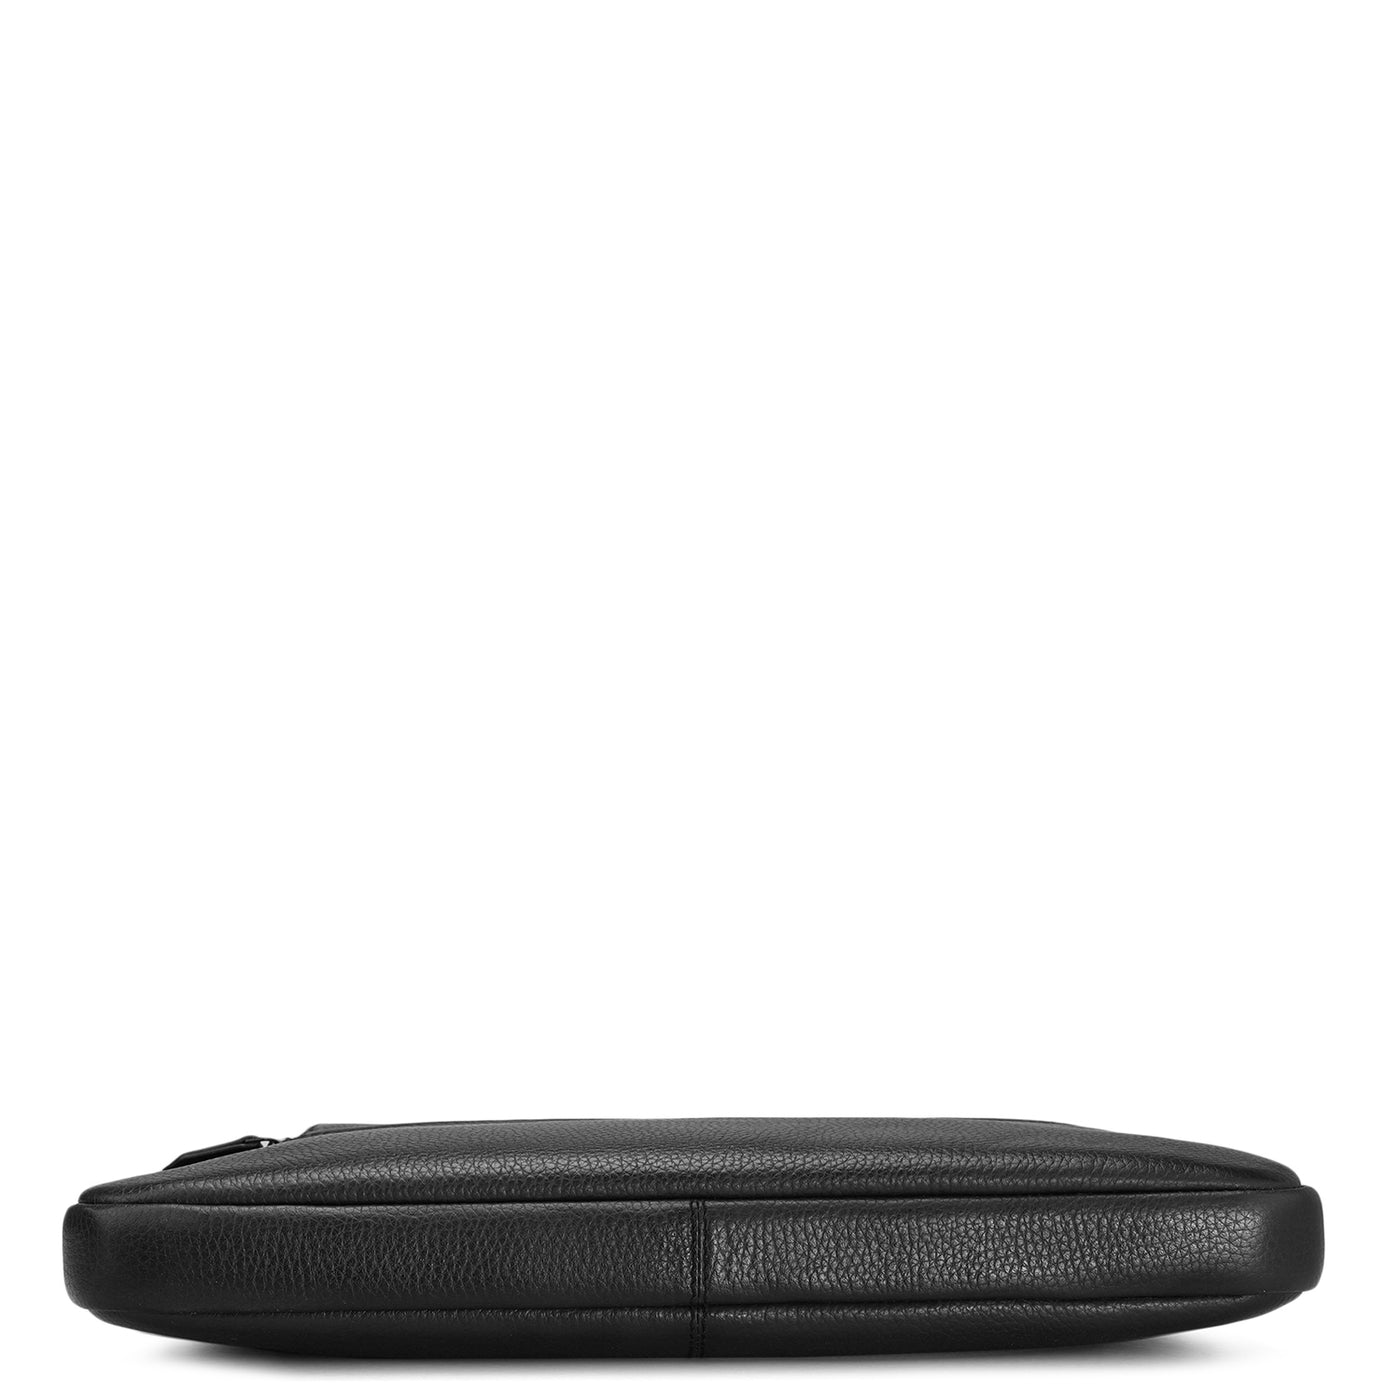 Black Wax Leather Laptop Sleeve - Upto 15"